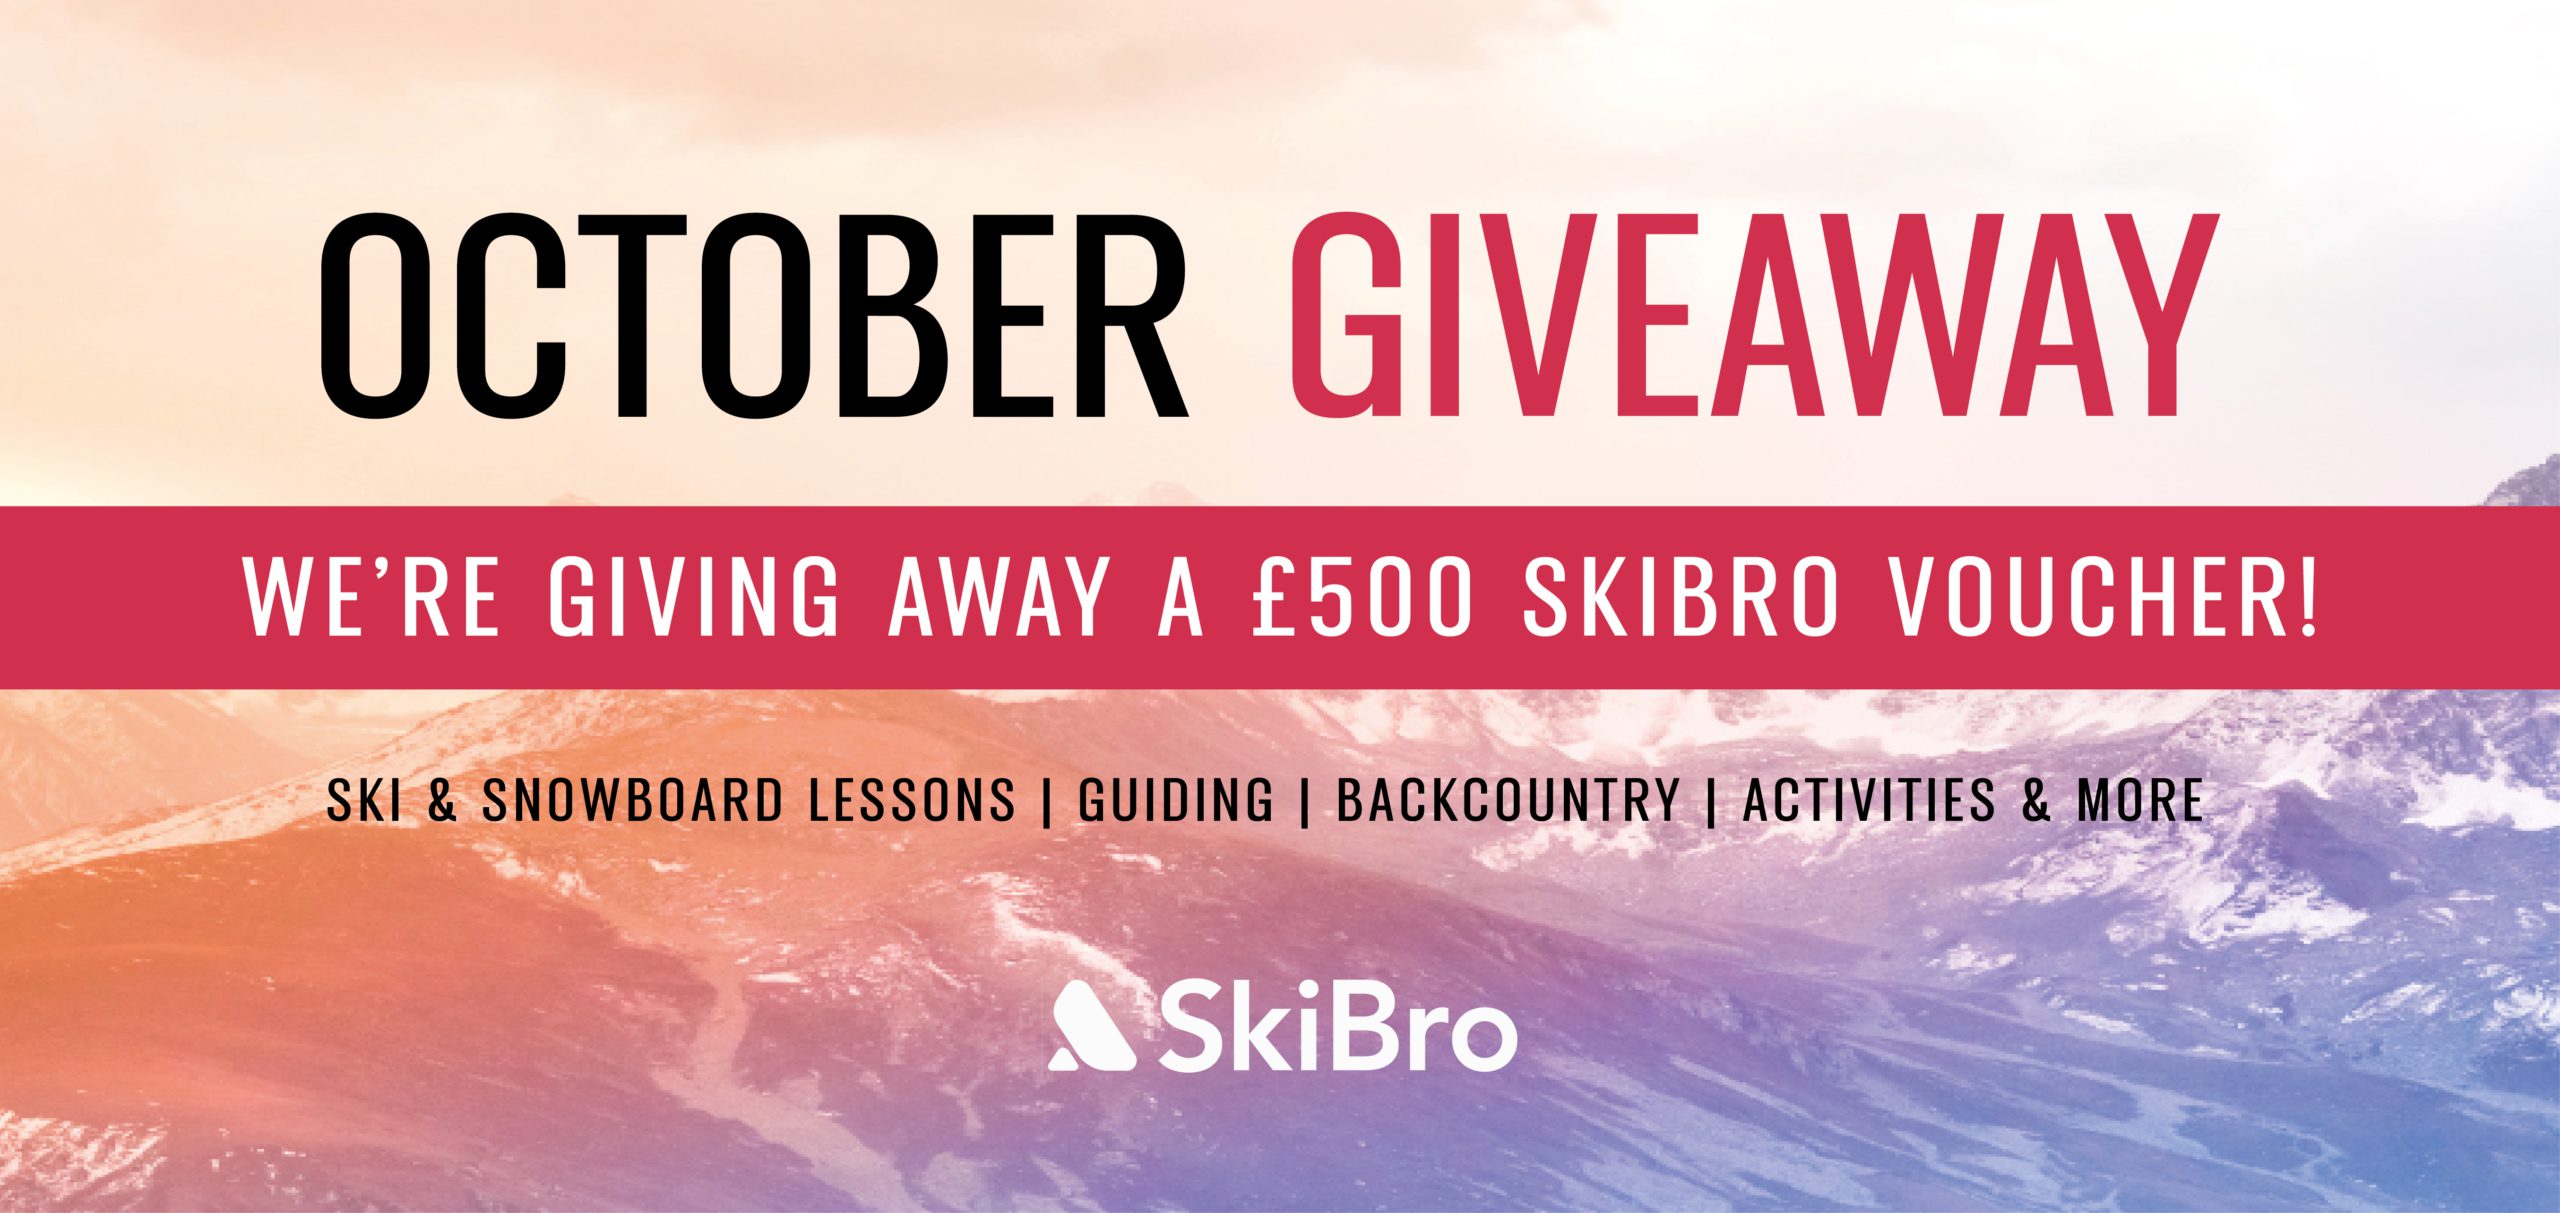 SkiBro £500 Activity Giveaway